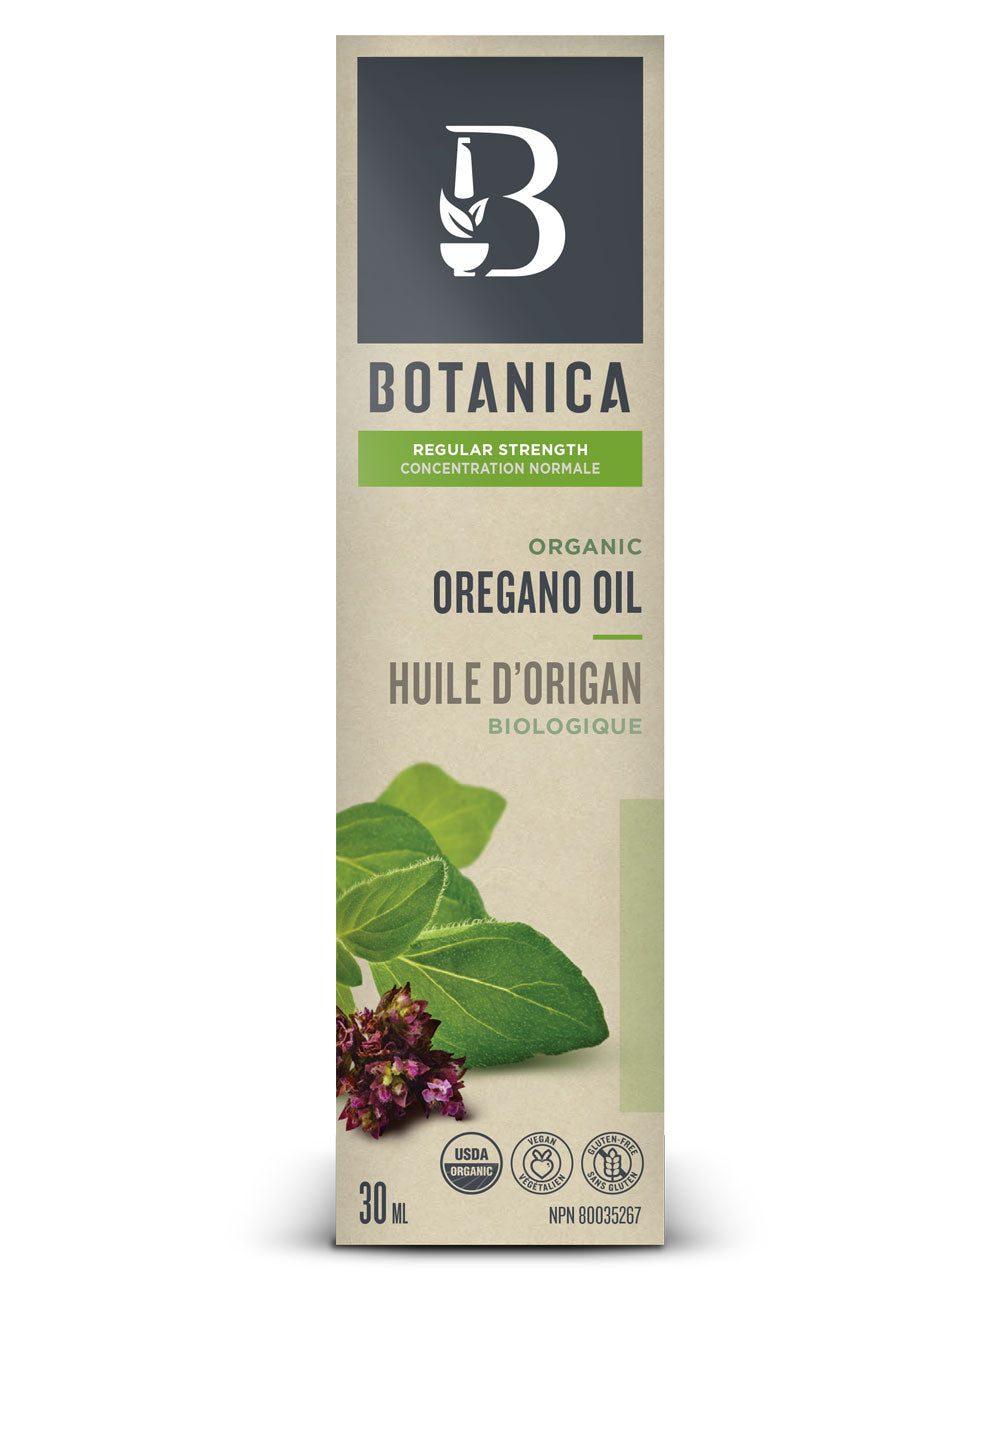 Botanica Oregano Oil - Regular Strength 13 (30ml) - Lifestyle Markets